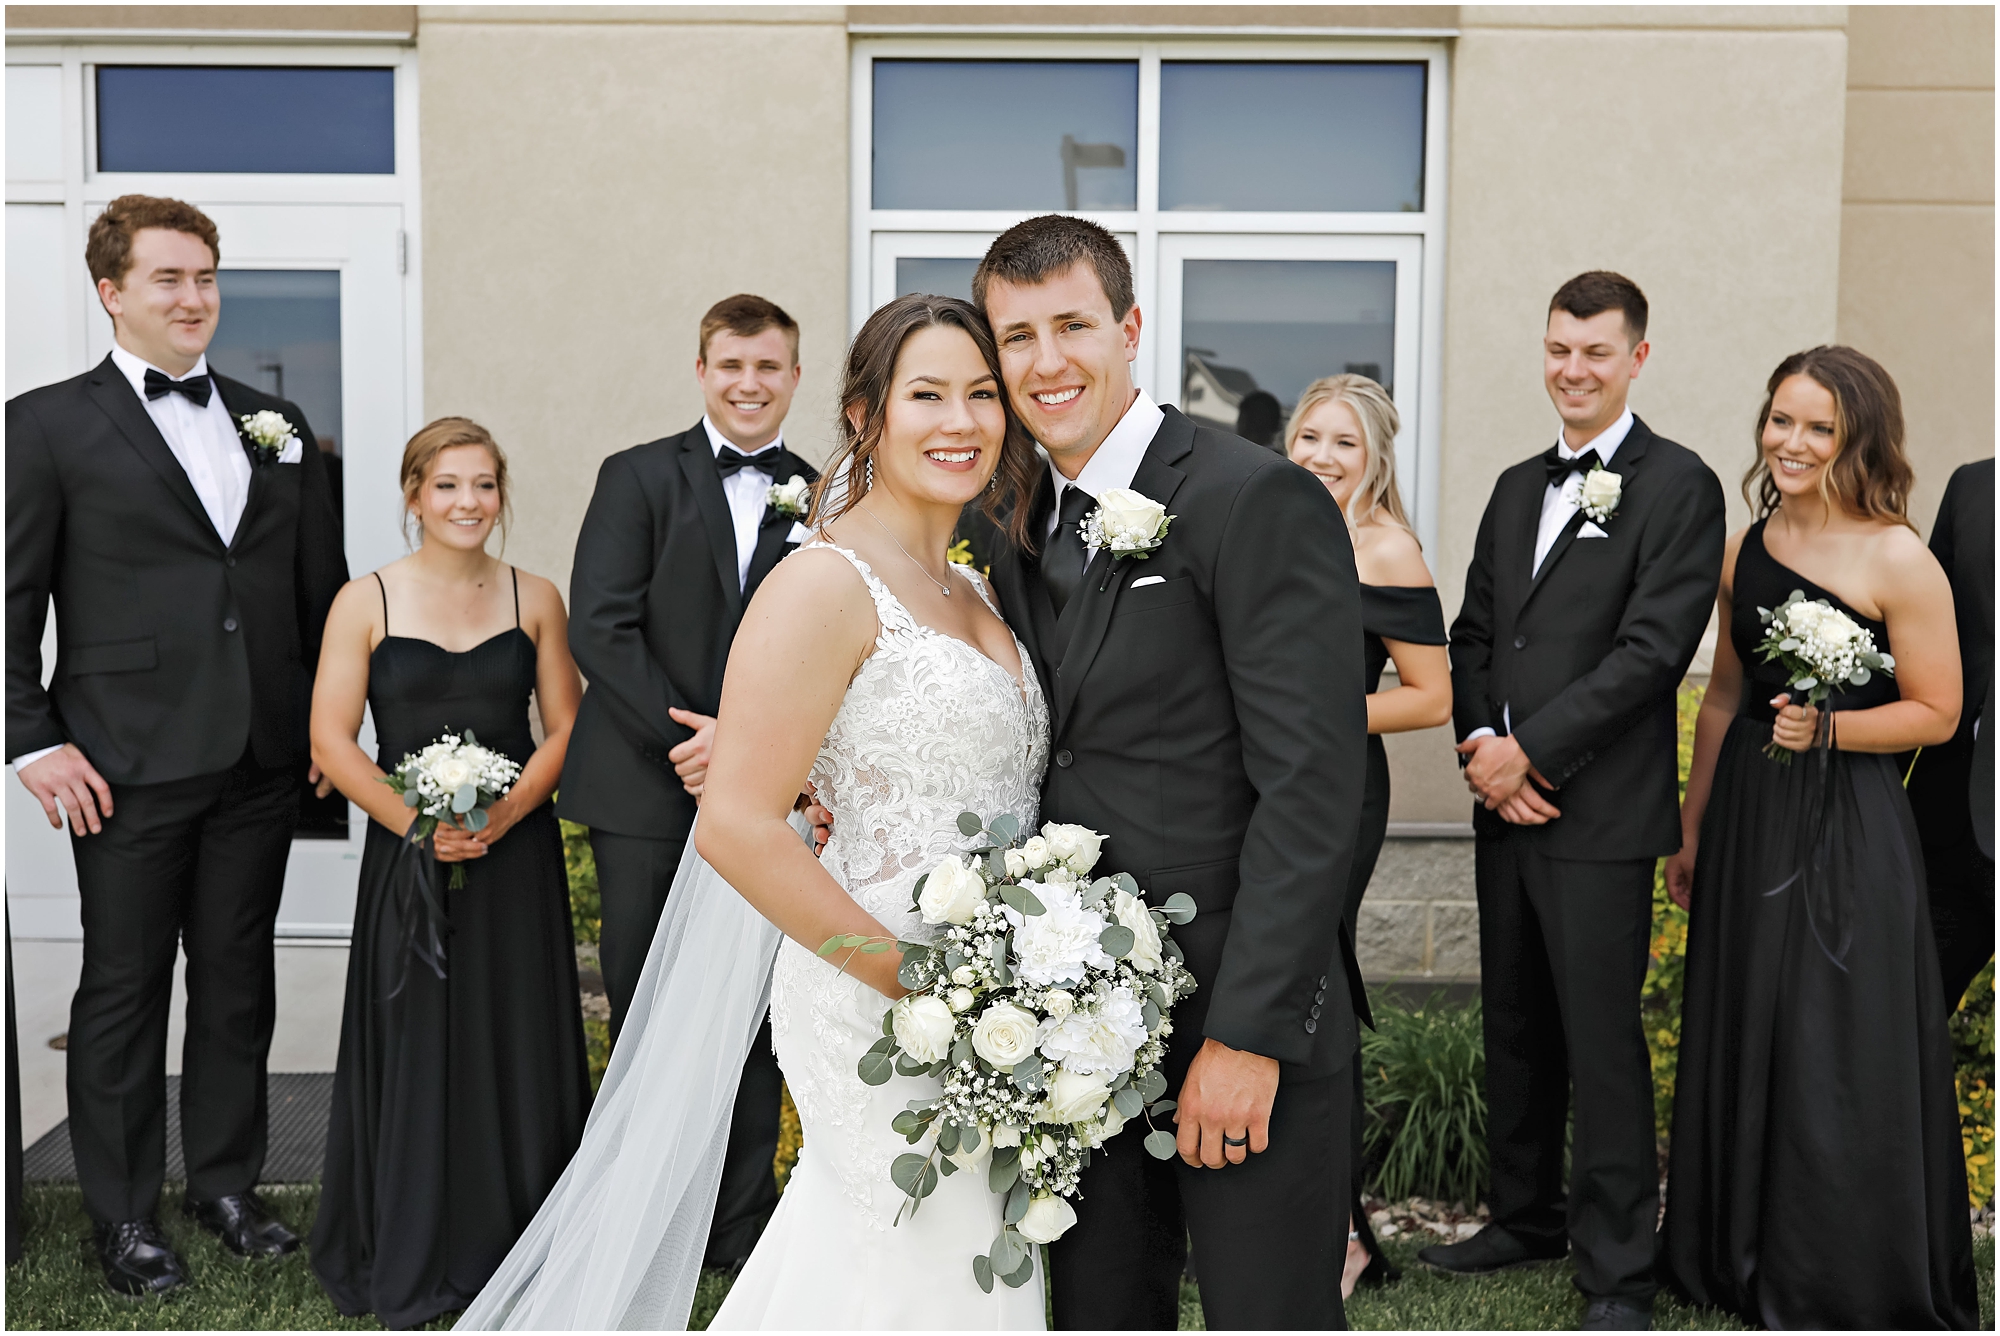 Bride and Groom in black and white wedding attire